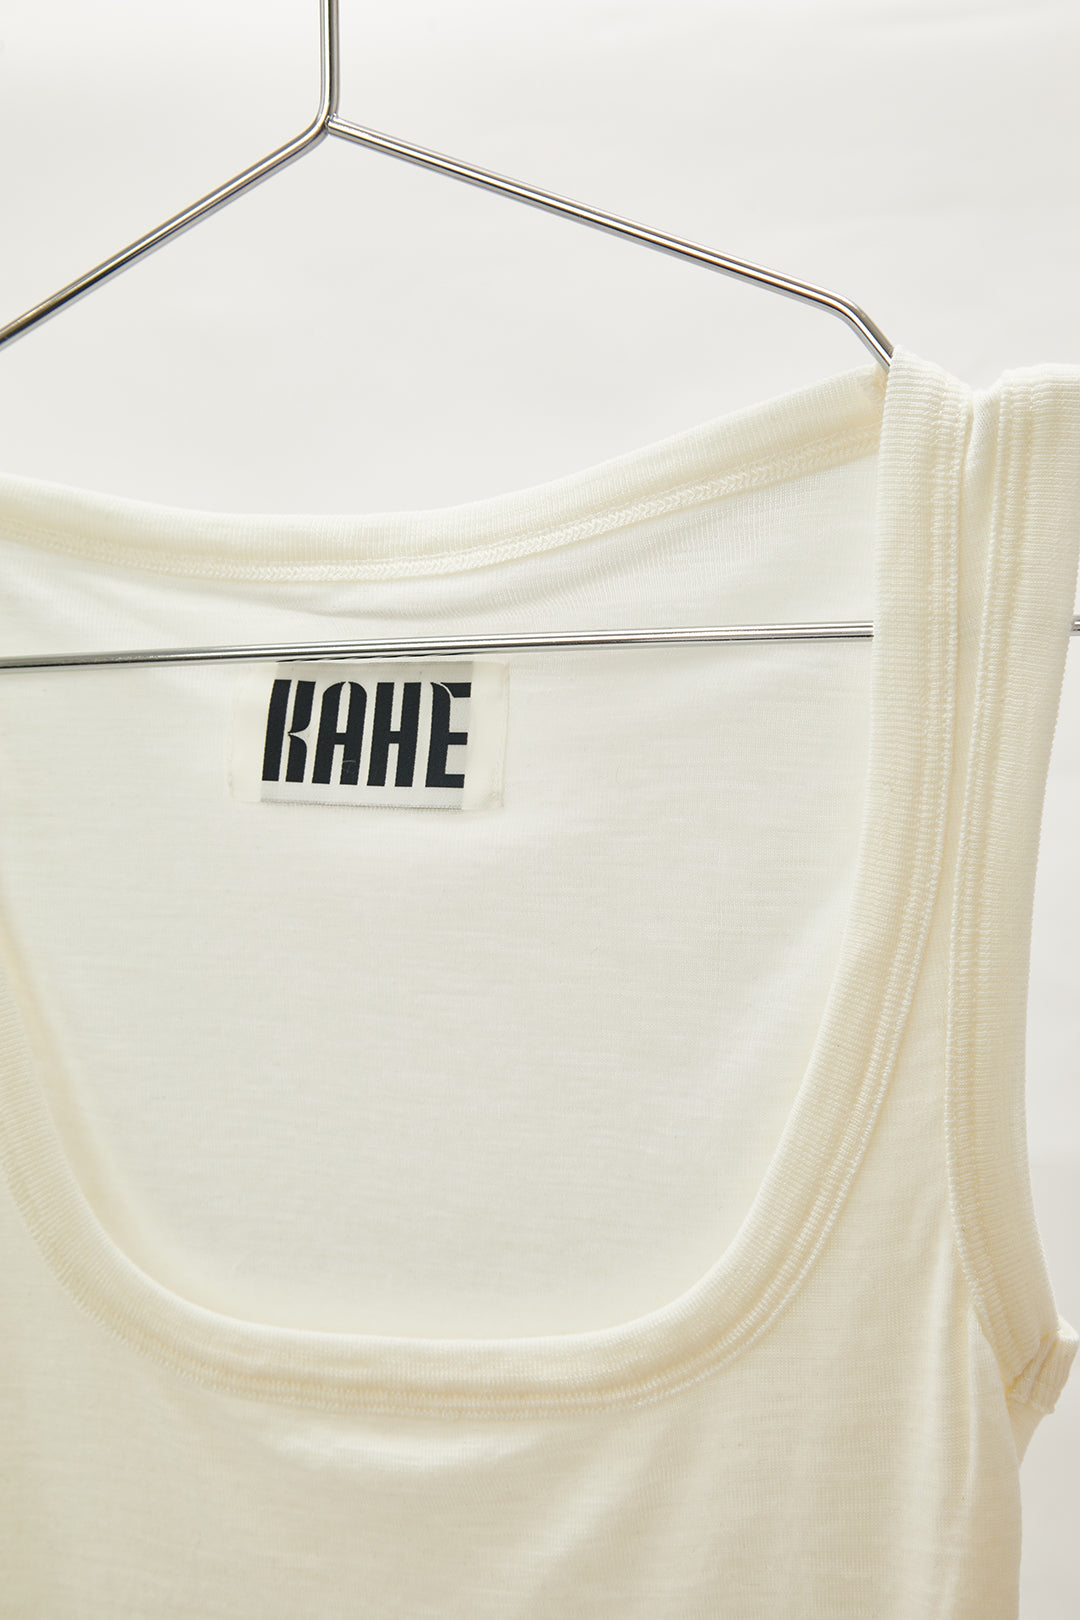 Kahe - Fatale Long Dress White